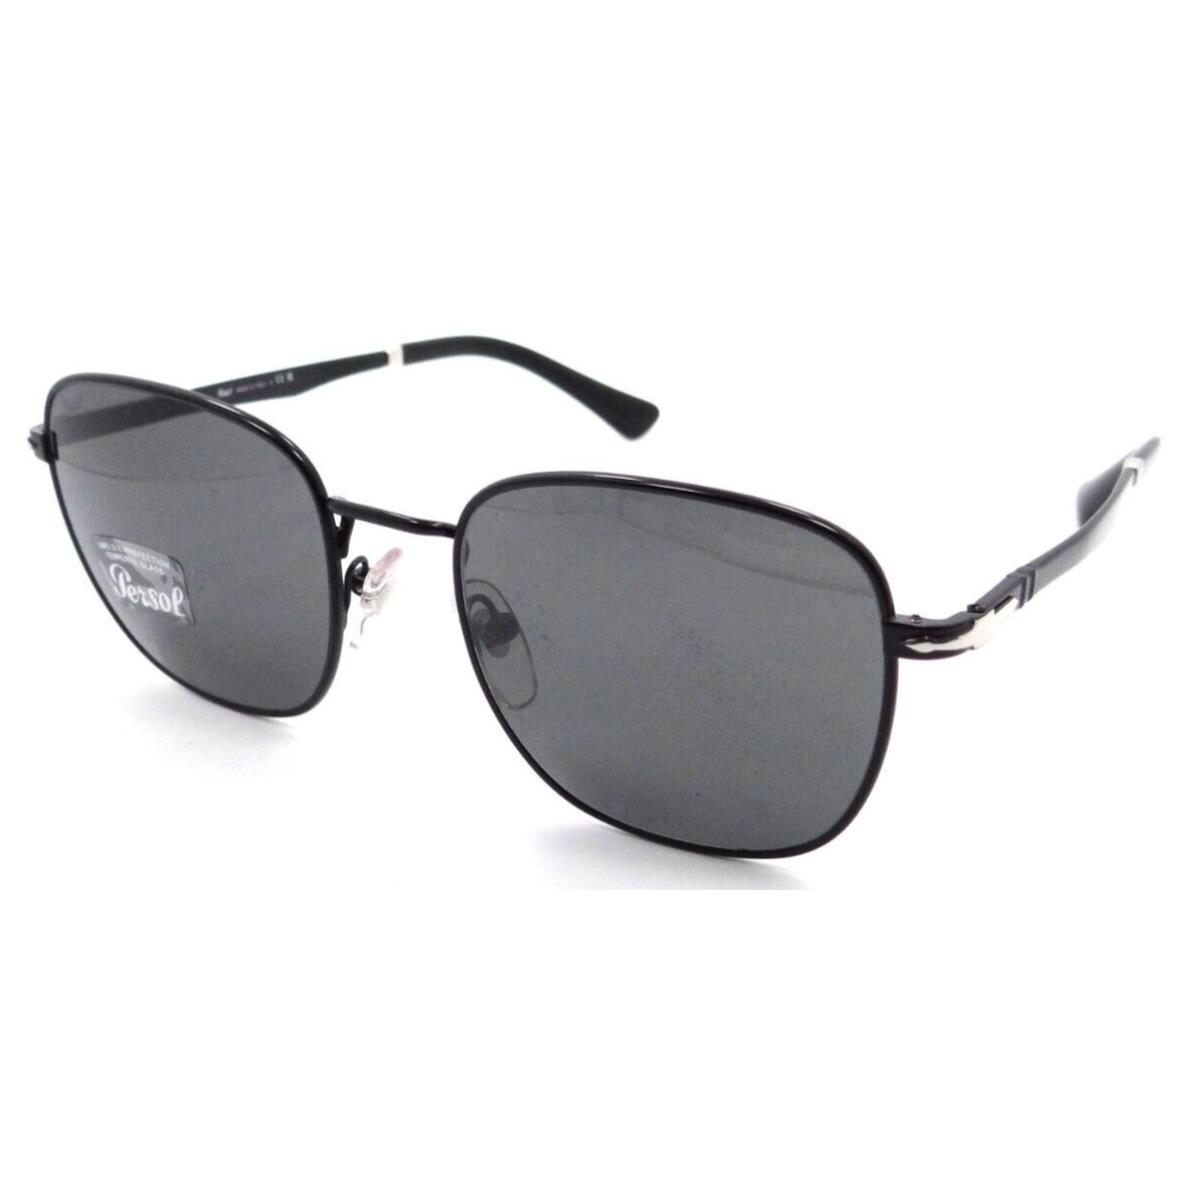 Persol Sunglasses PO 2497S 1078/B1 52-20-140 Black / Dark Grey Made in Italy